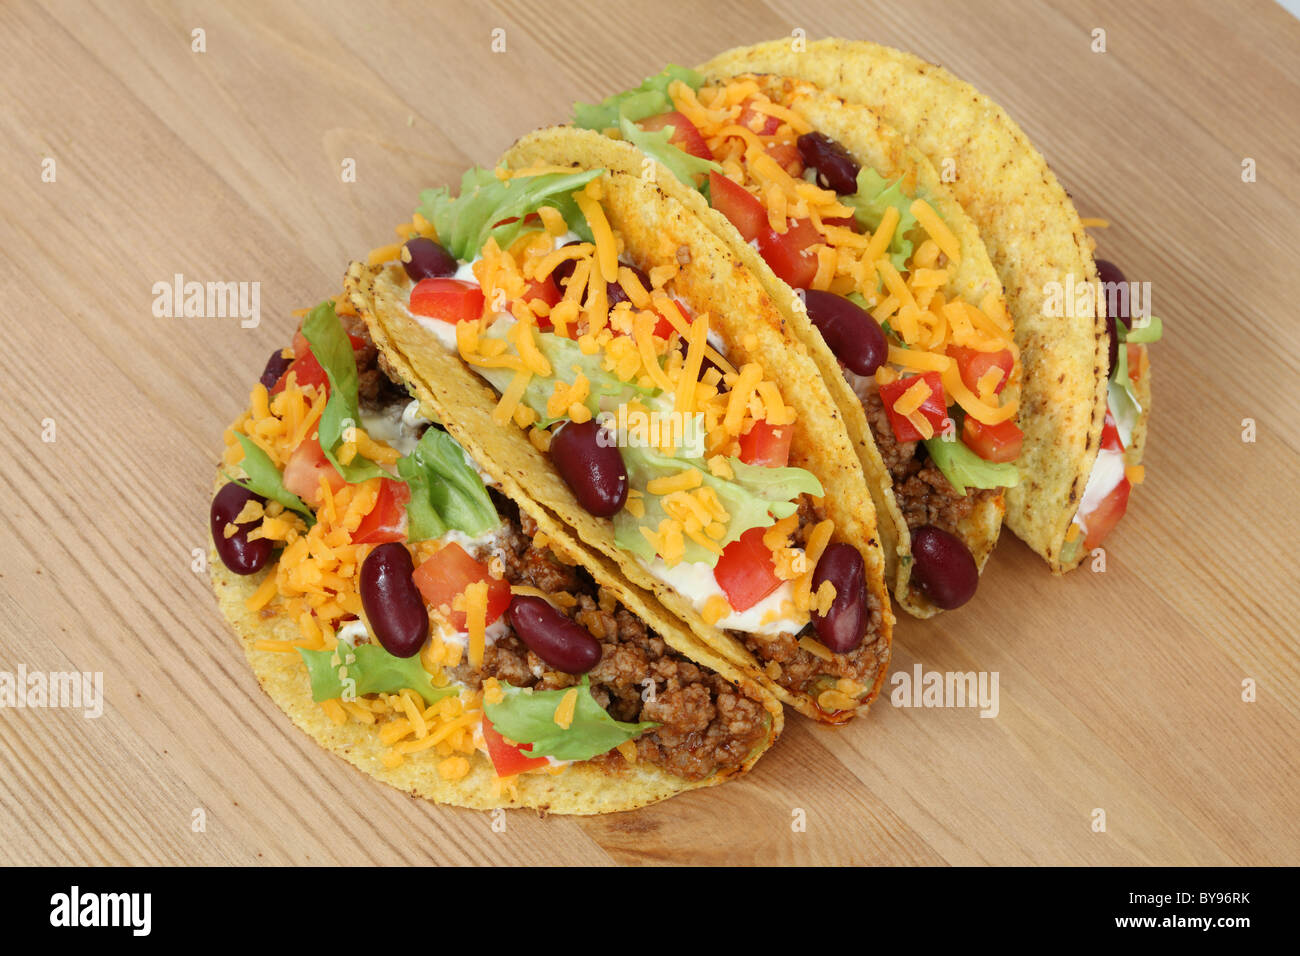 Mexican food - delicious tacos Stock Photo